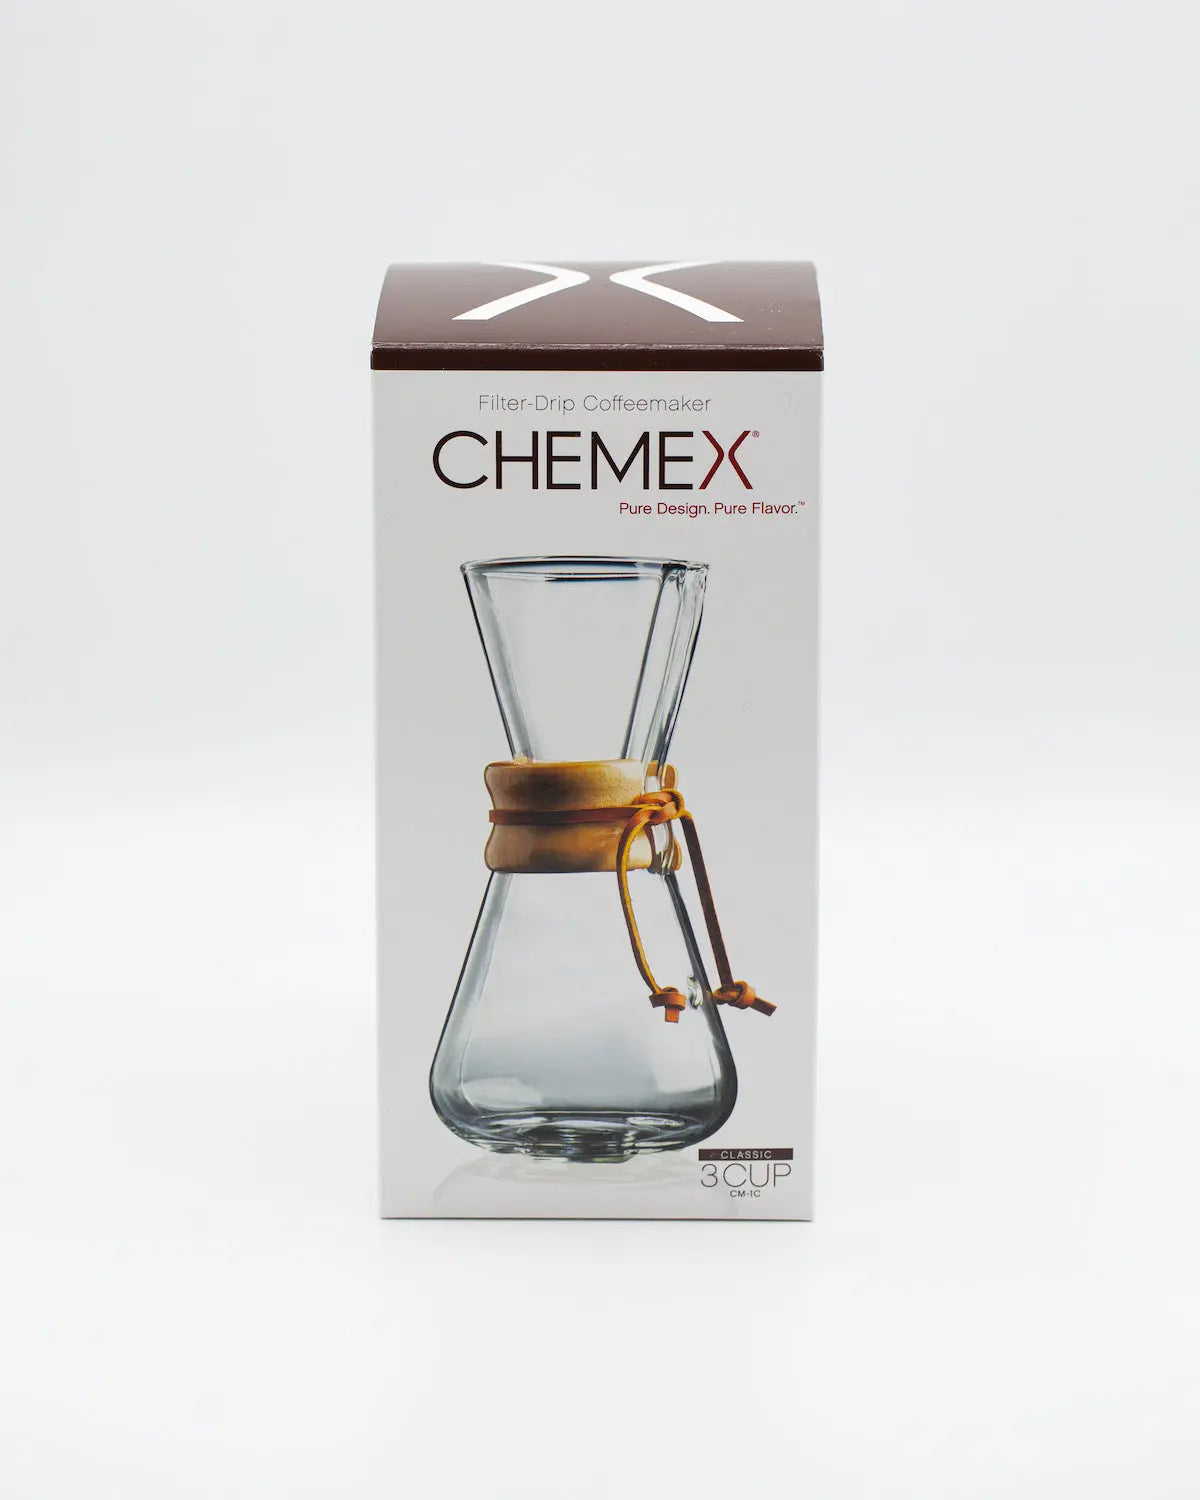 Classic Chemex – Variety Coffee